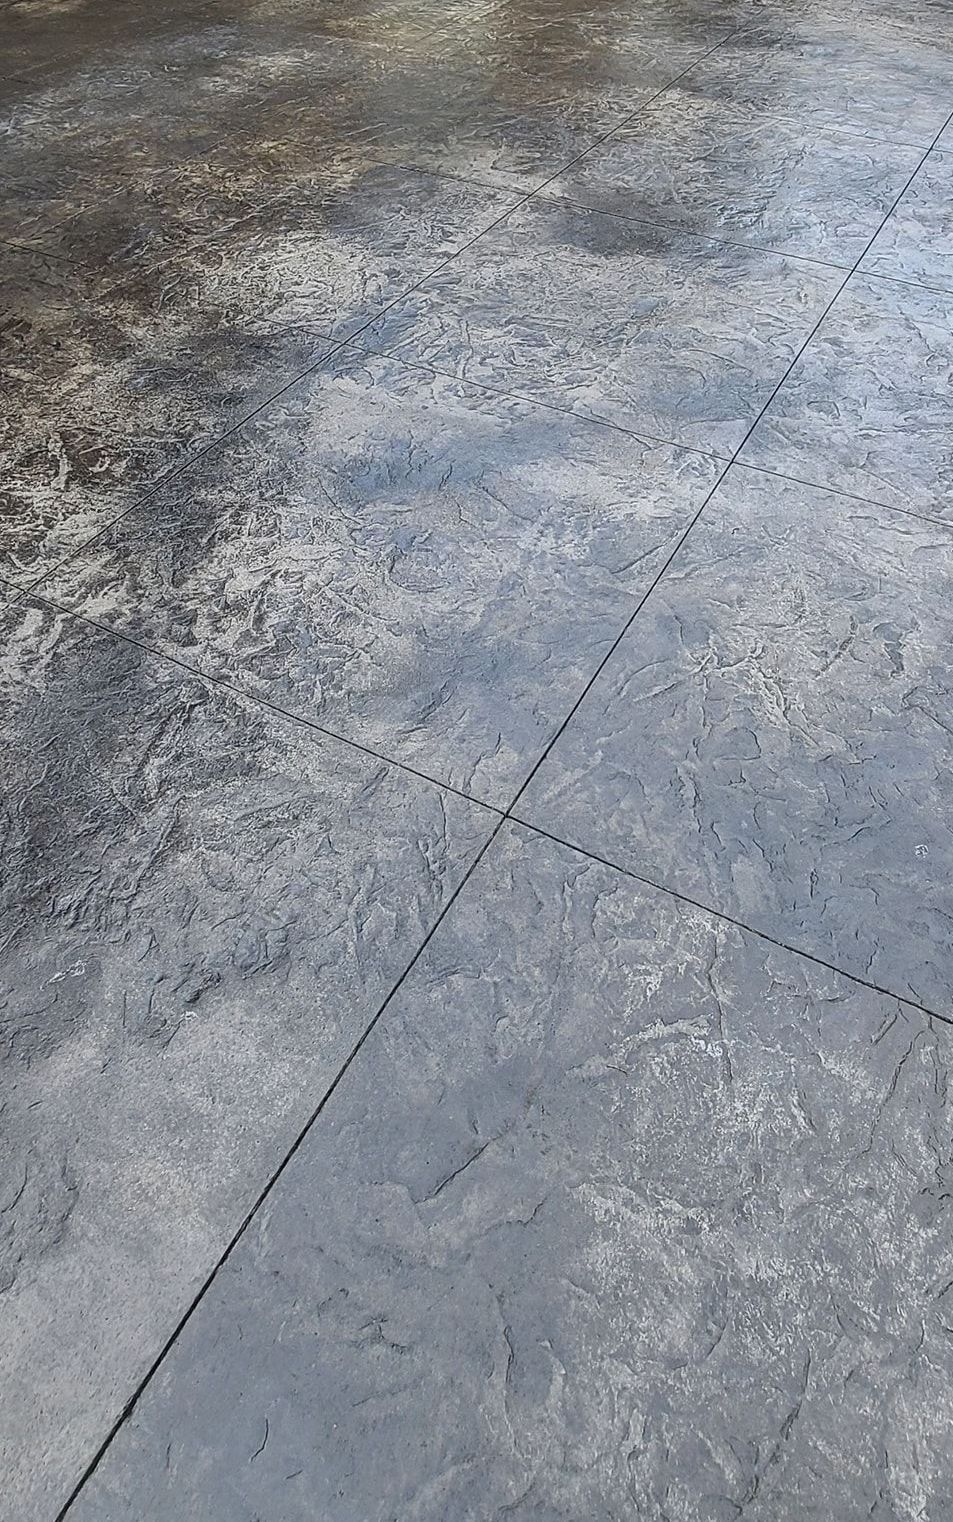 A close up of a concrete floor with a diagonal line.